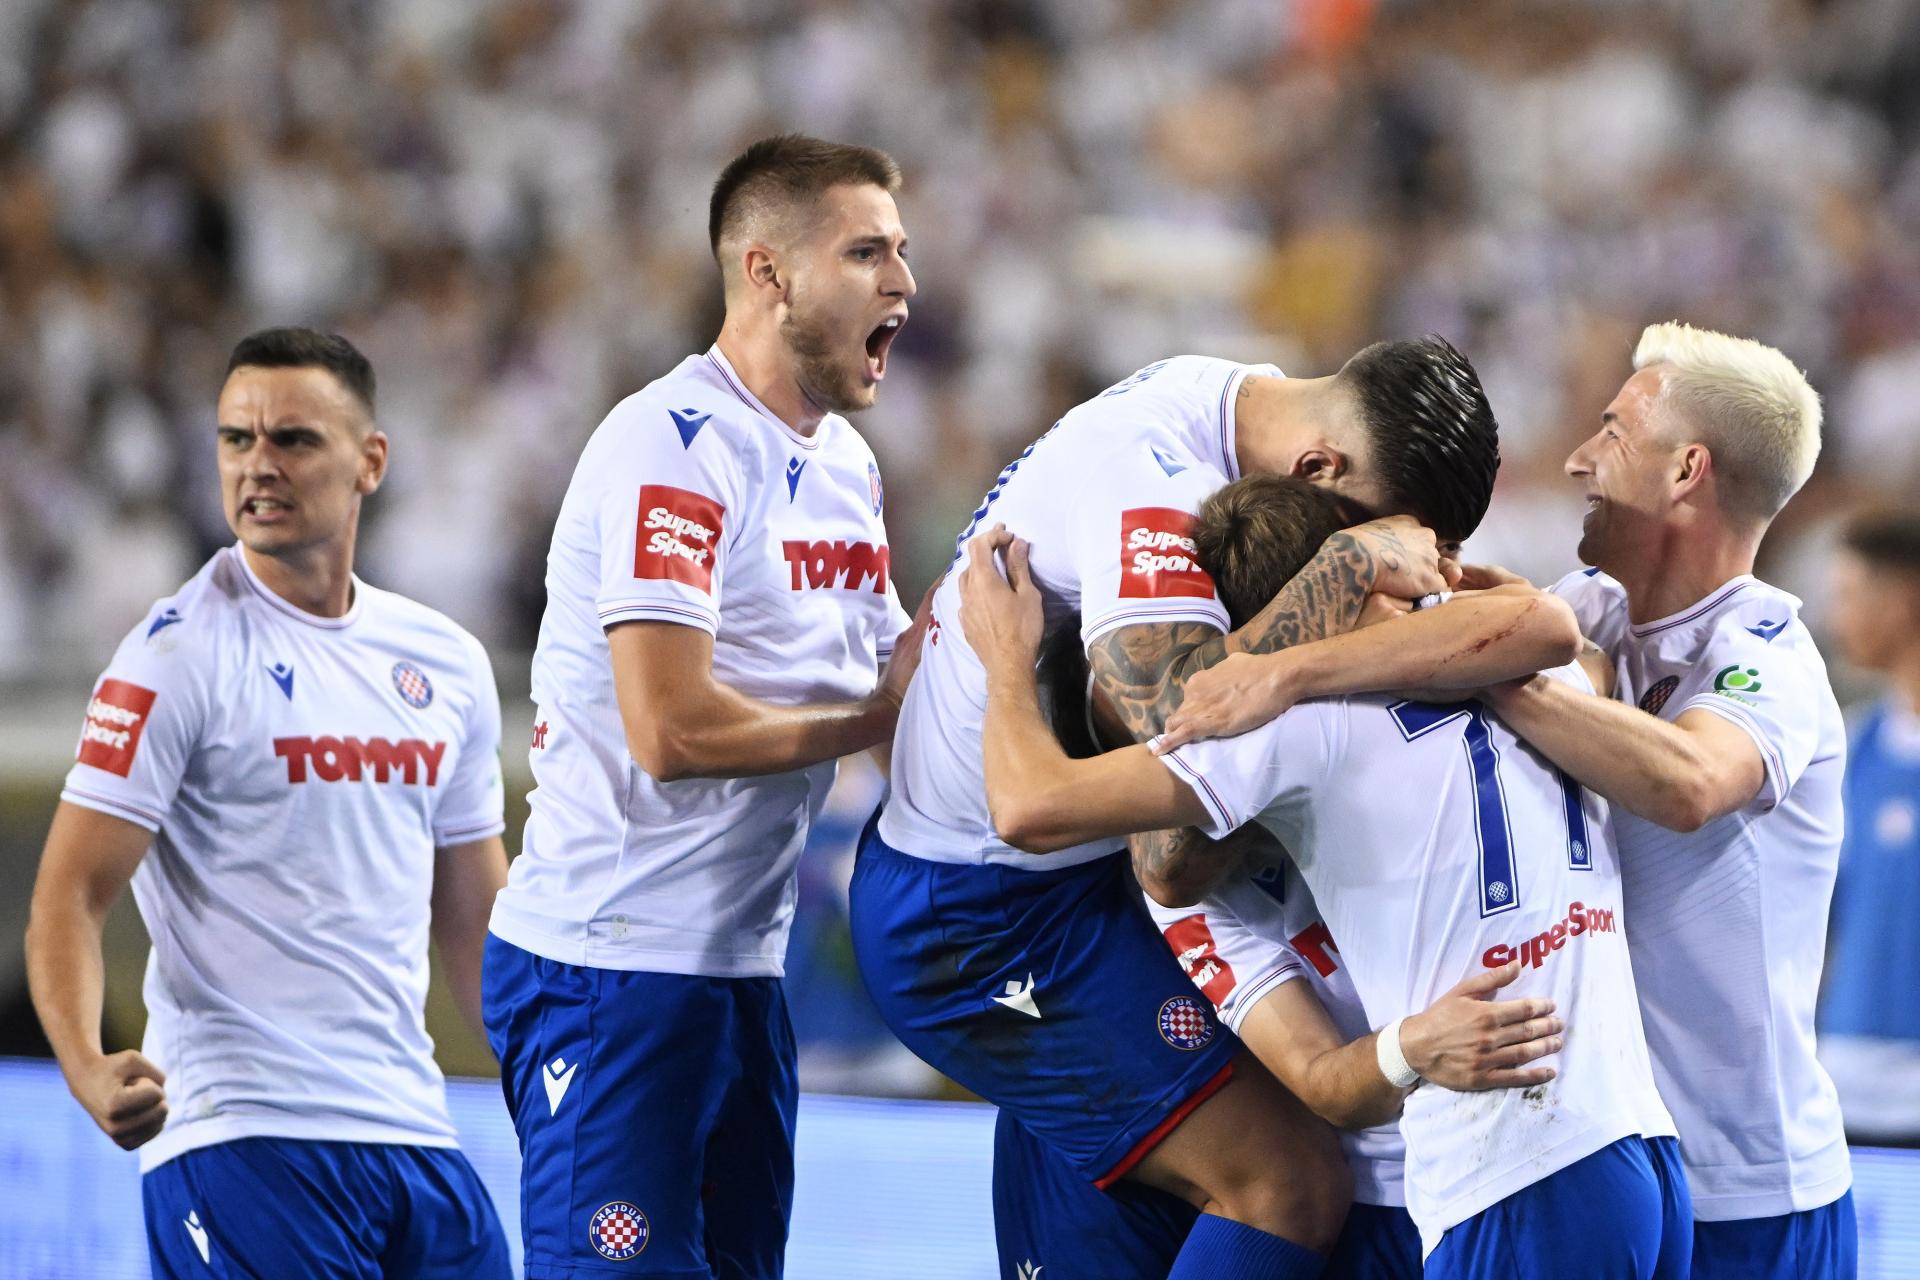 Emir Sahiti: It's a special feeling to score against Dinamo Zagreb 